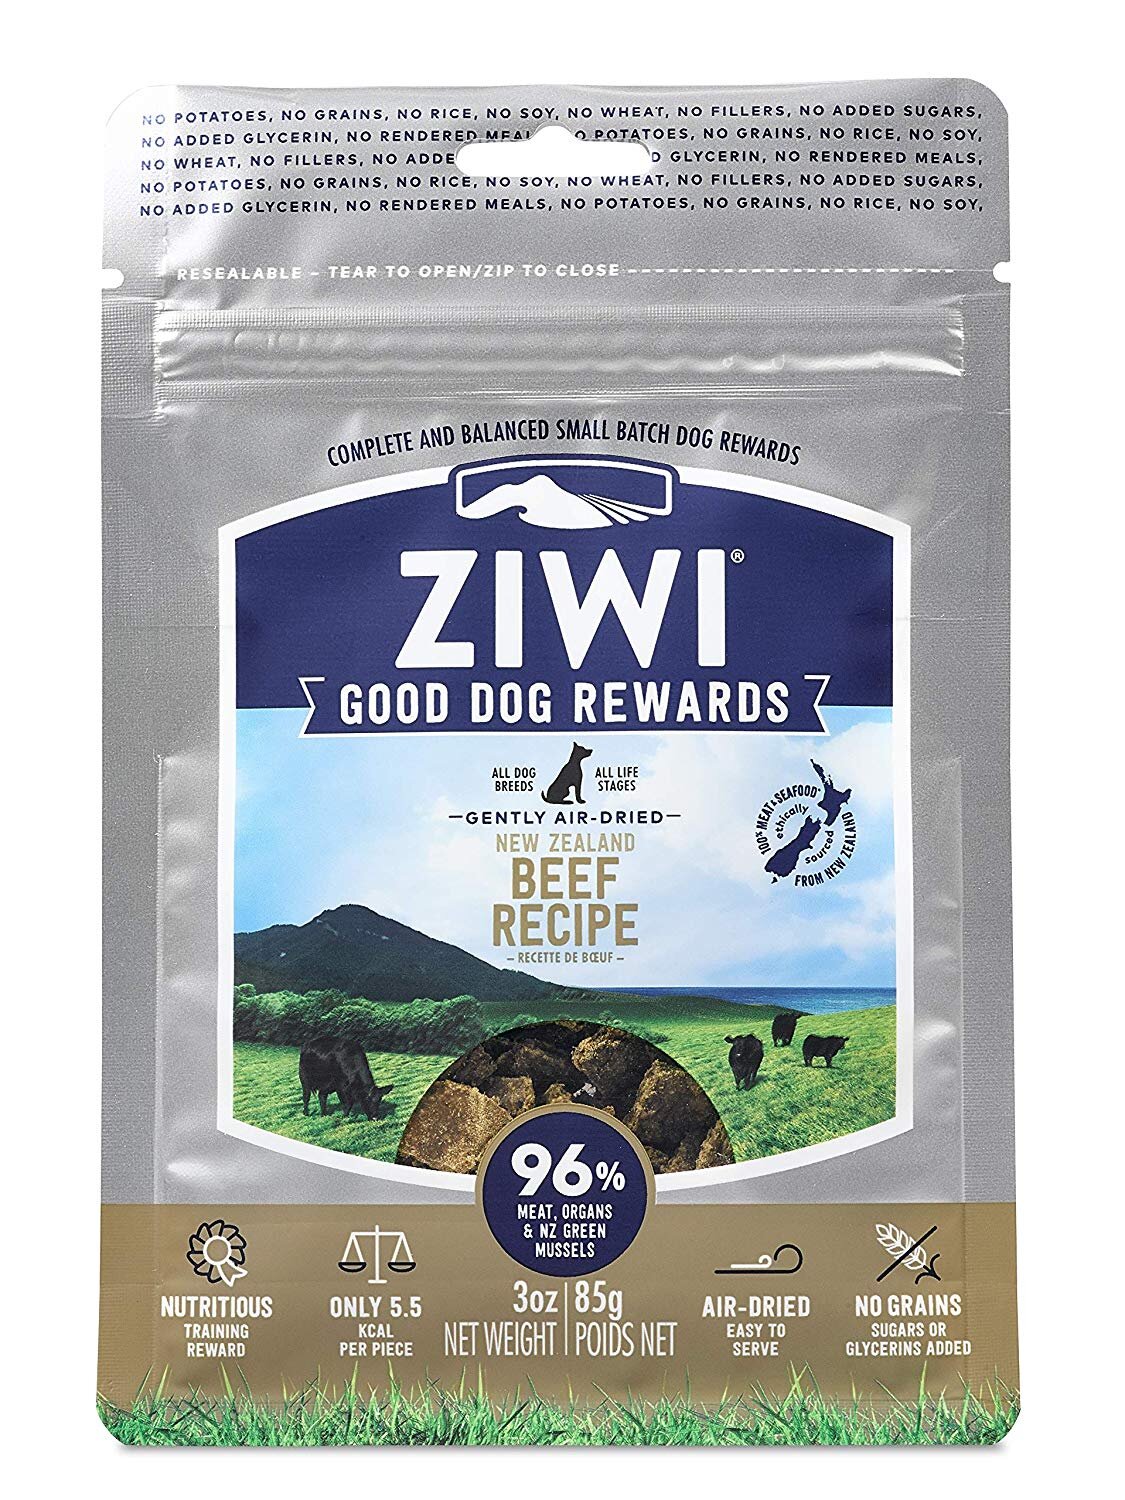 Ziwipeak dog food